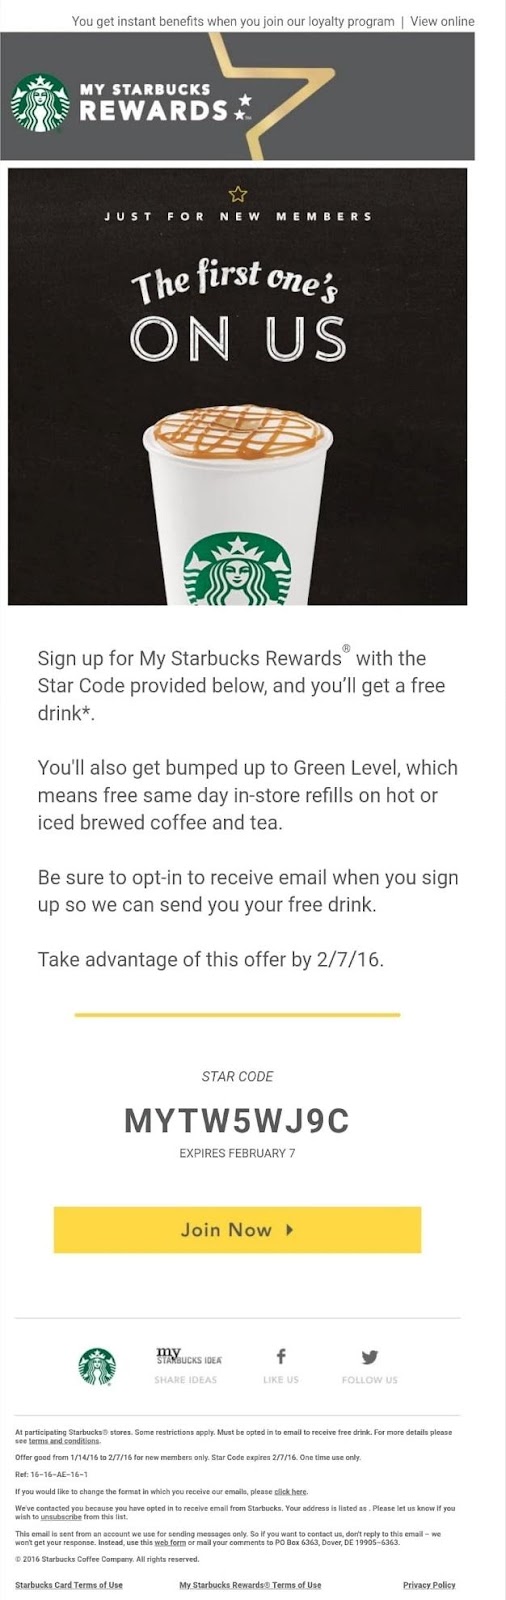 Starbucks franchise examples for advertising programs, customer loyalty, and referral programs